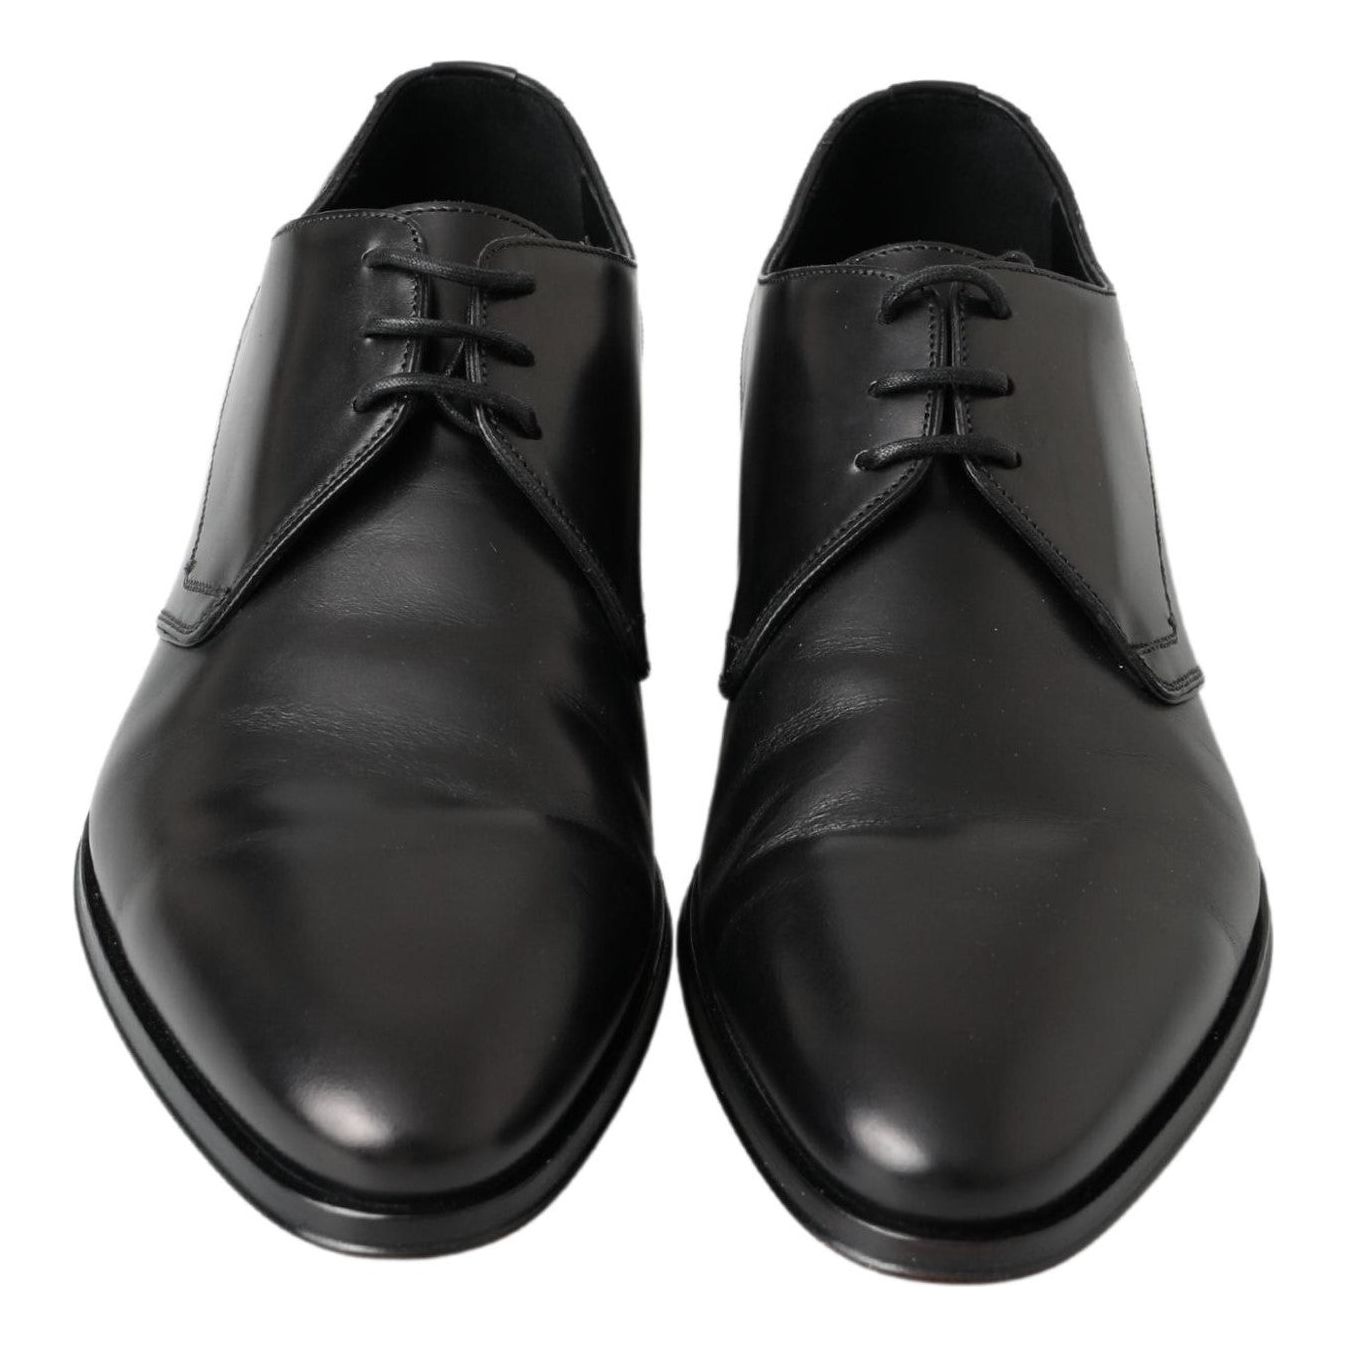 Dolce & Gabbana Classic Black Leather Derby Shoes black-derby-formal-dress-shoes